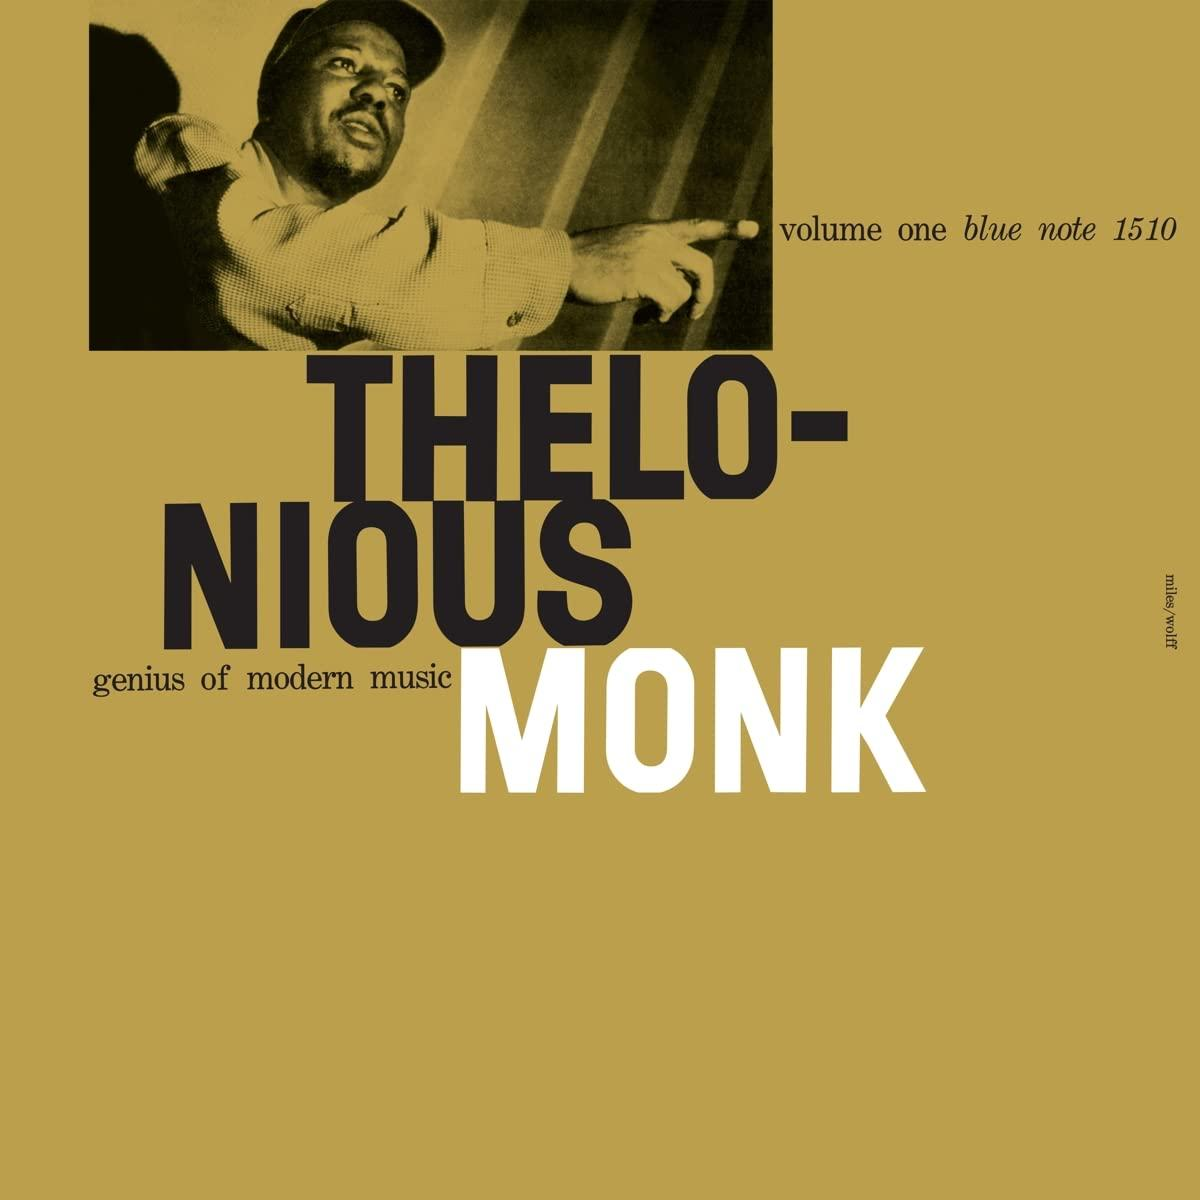 Genius Of - - Music Thelonius Modern (Vinyl) Monk